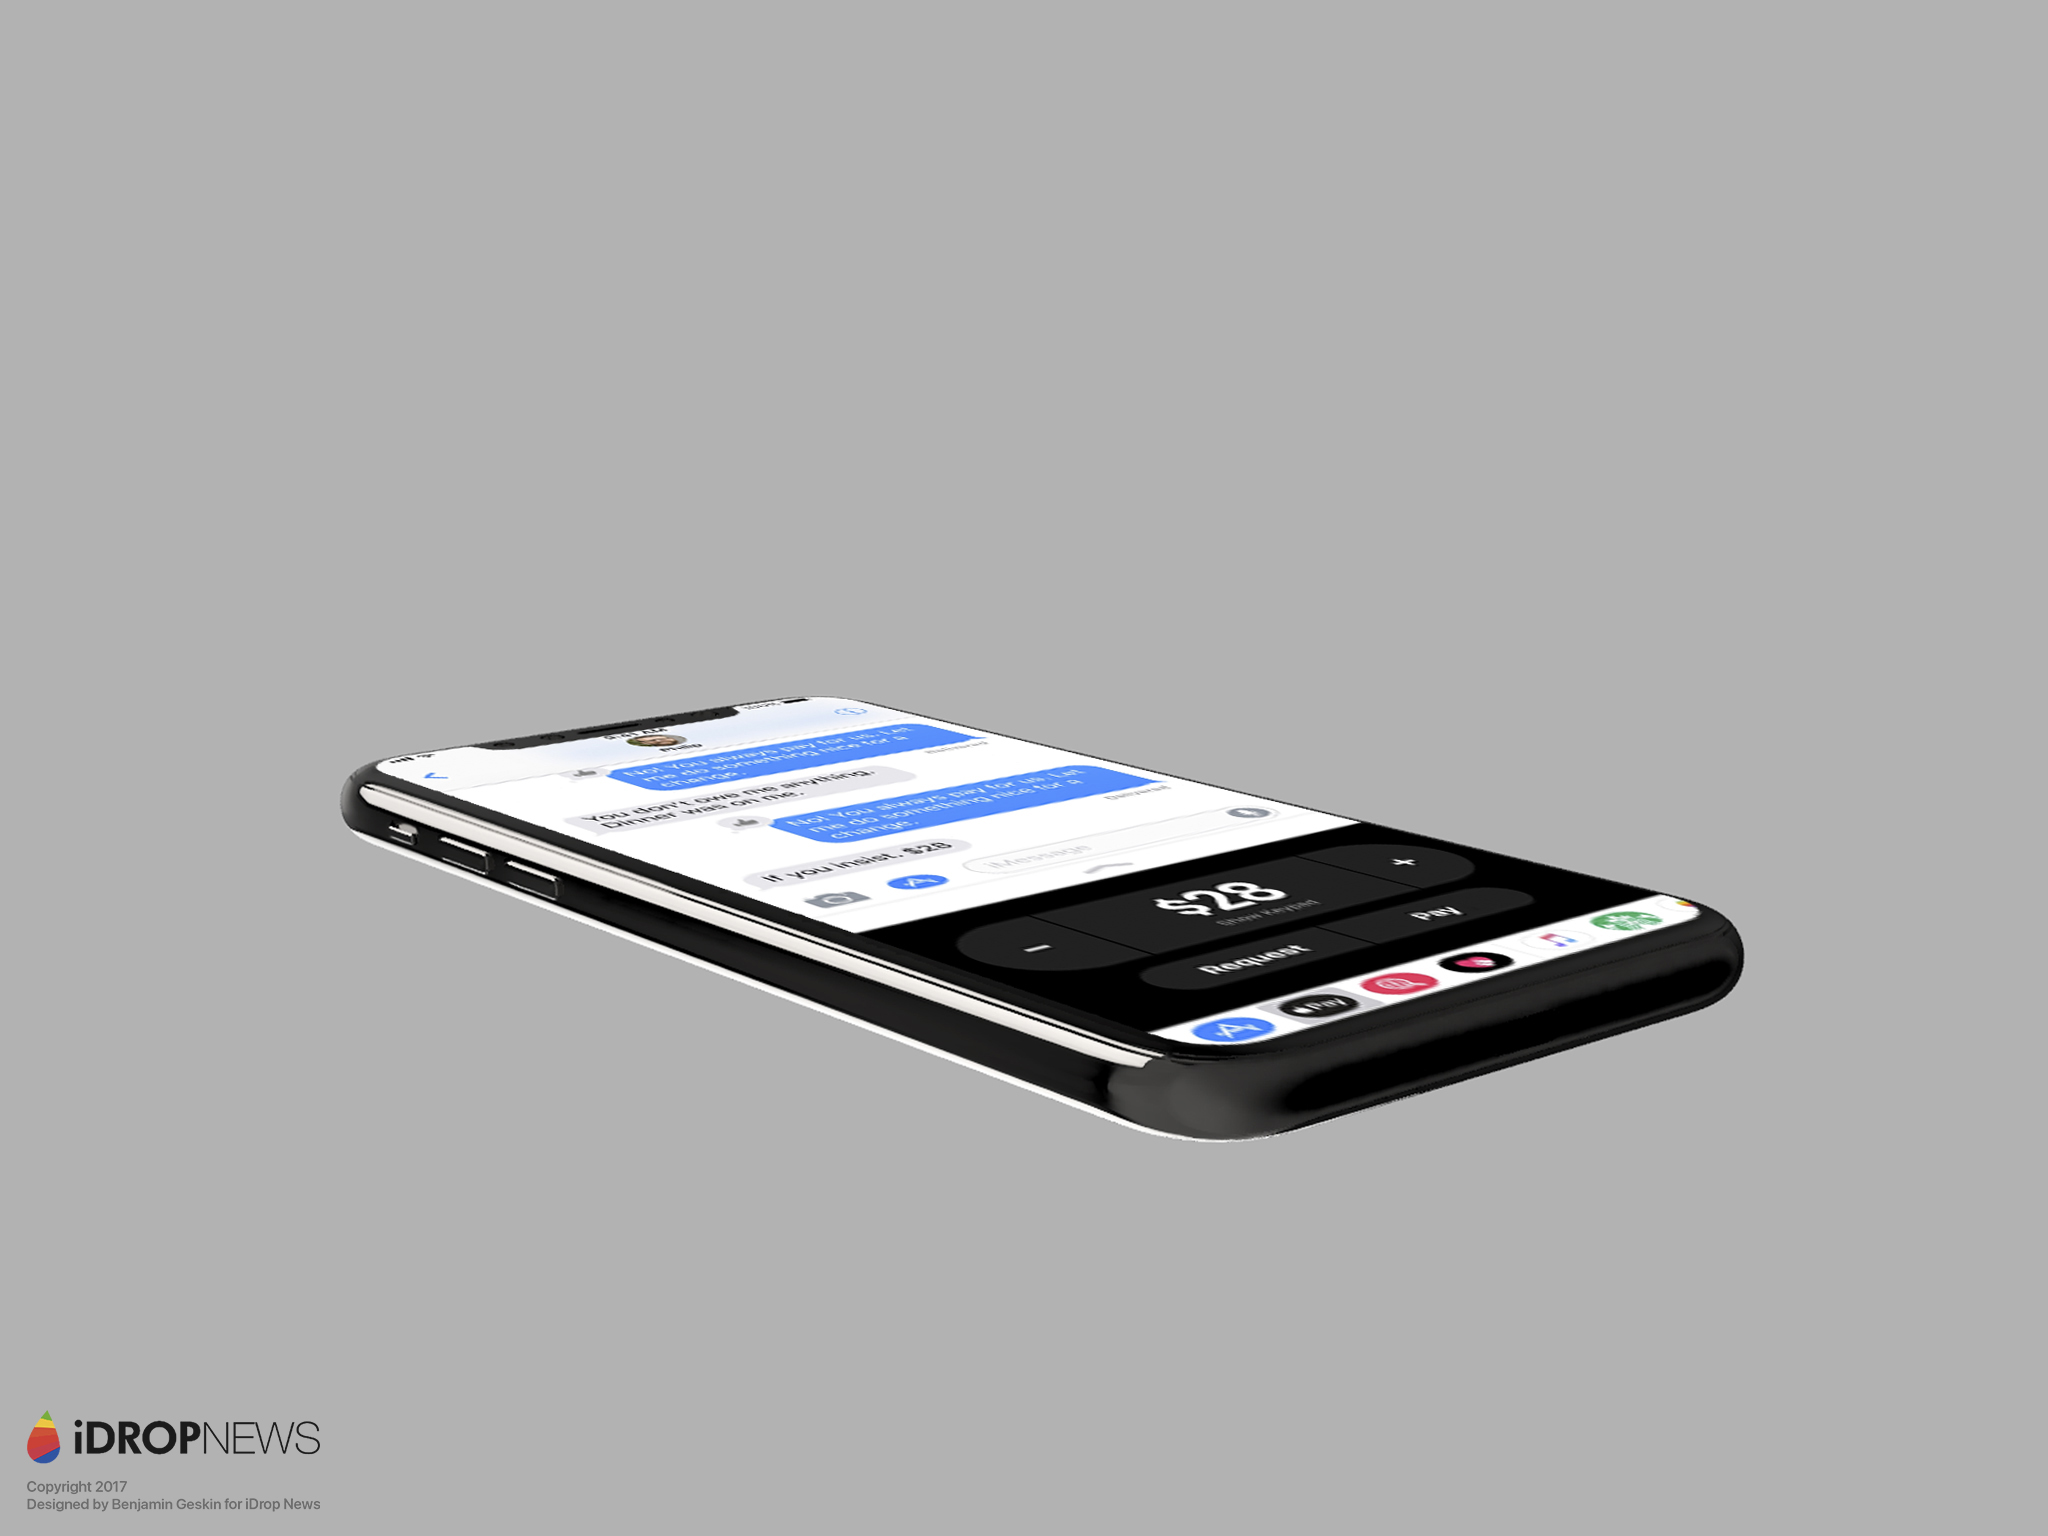 iPhone X iOS 11 Concept Image